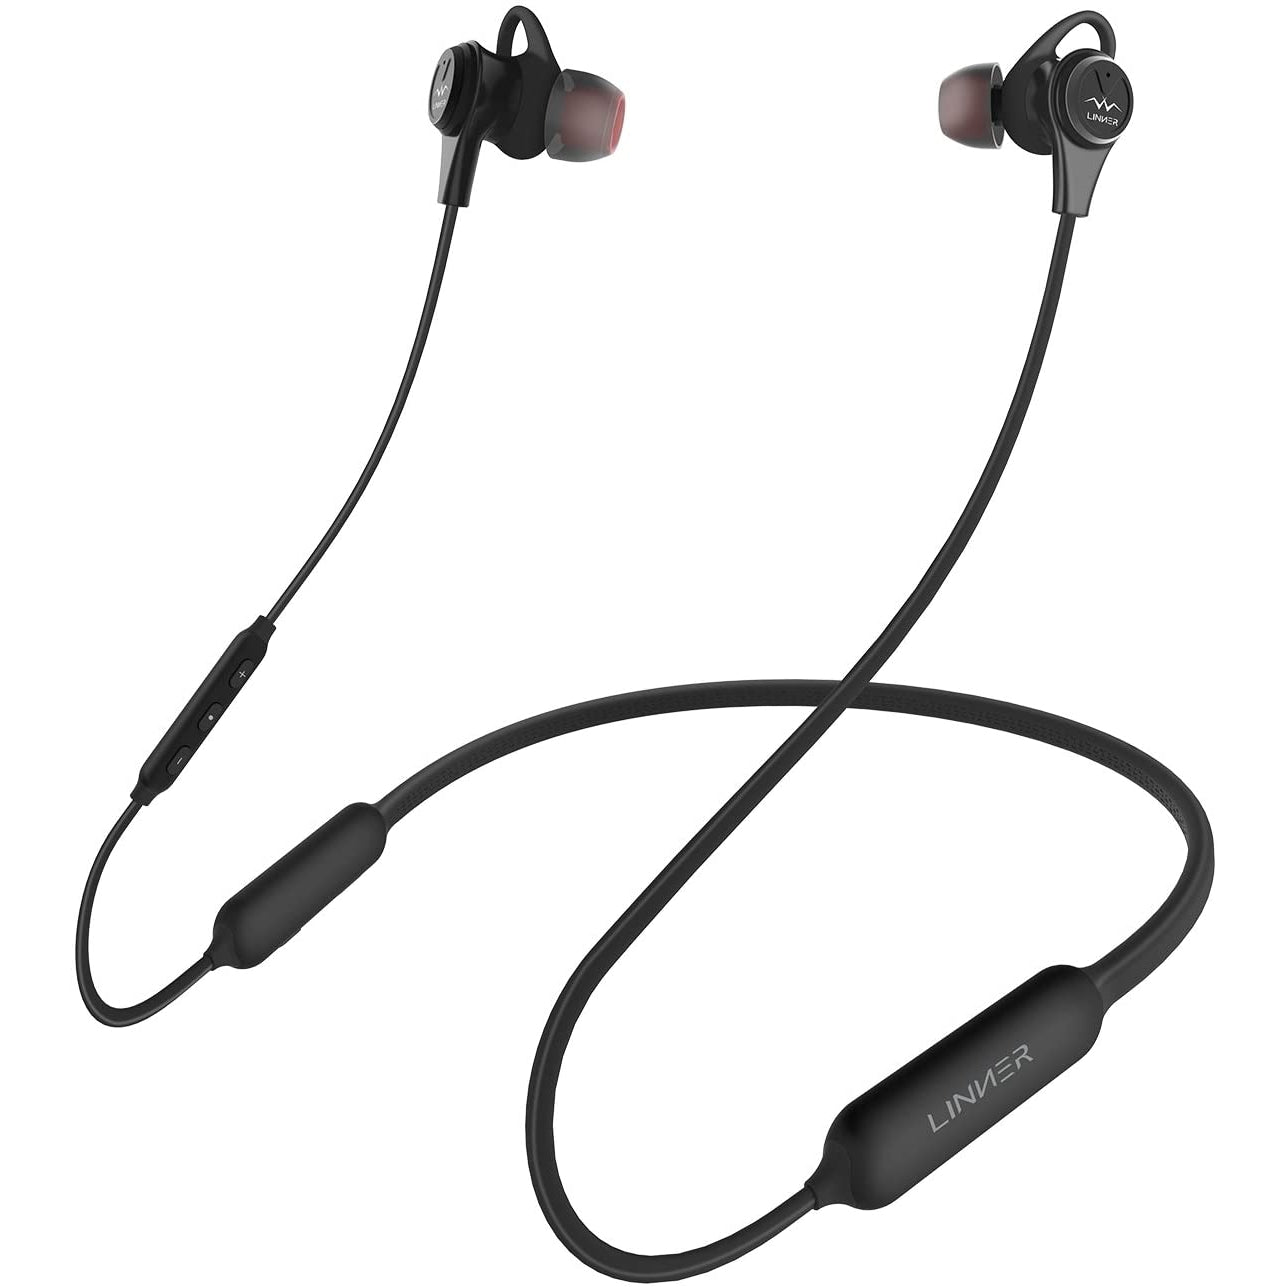 Linner NC50 Pro Active Noise Cancelling Bluetooth Headphones 4.1 Wireless Sports Earphones, Black